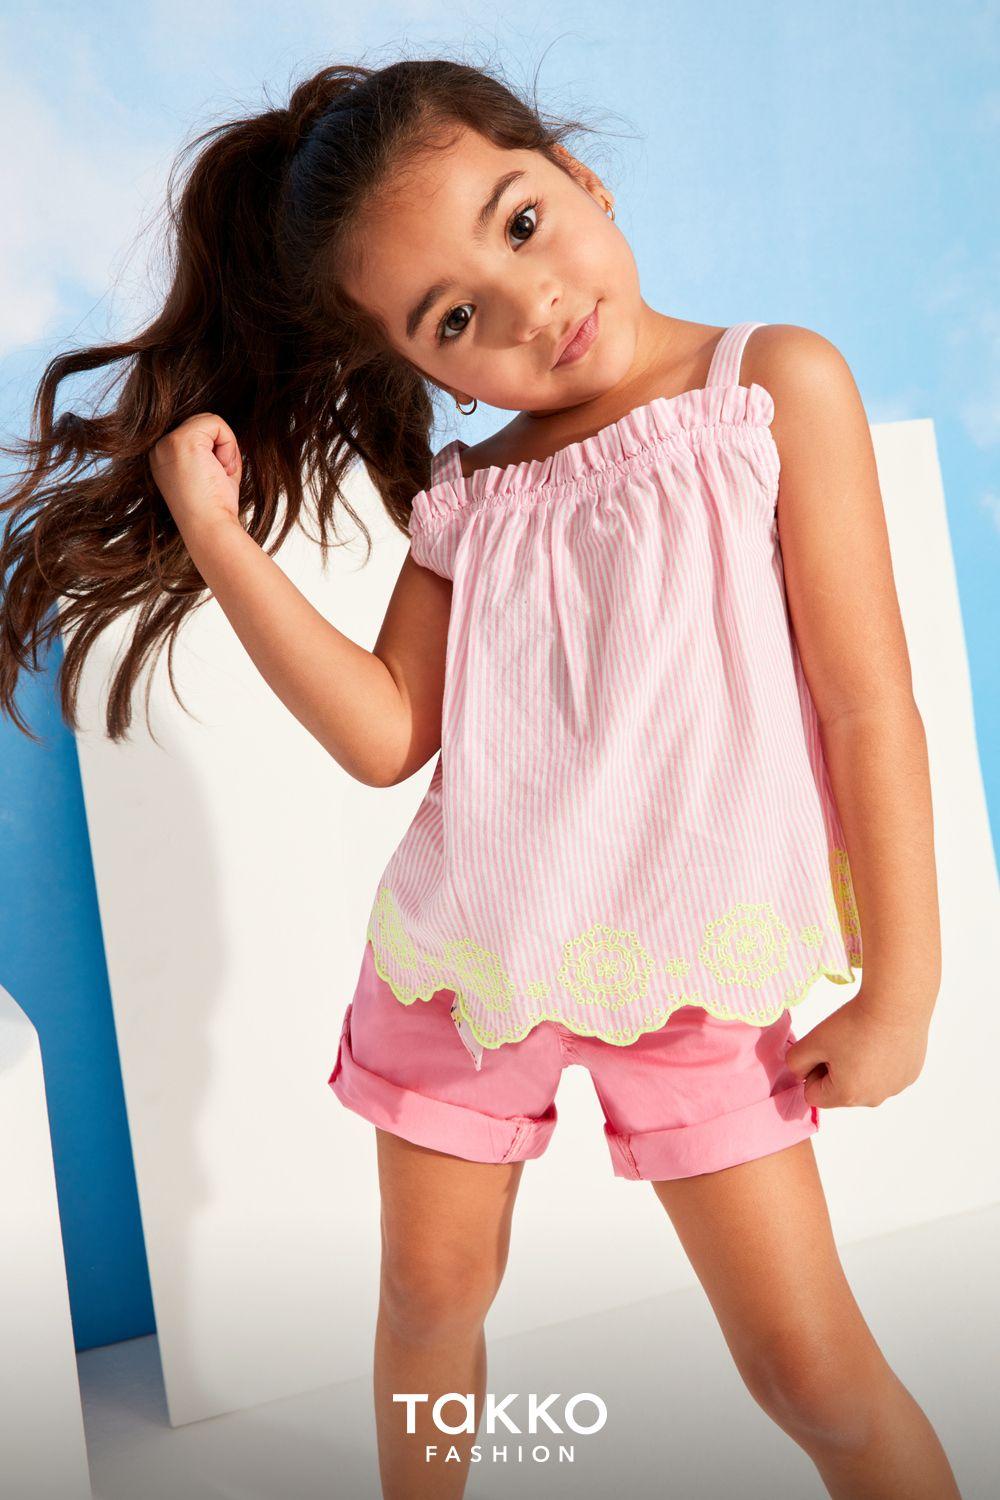 Skimpy fashion for little girls 